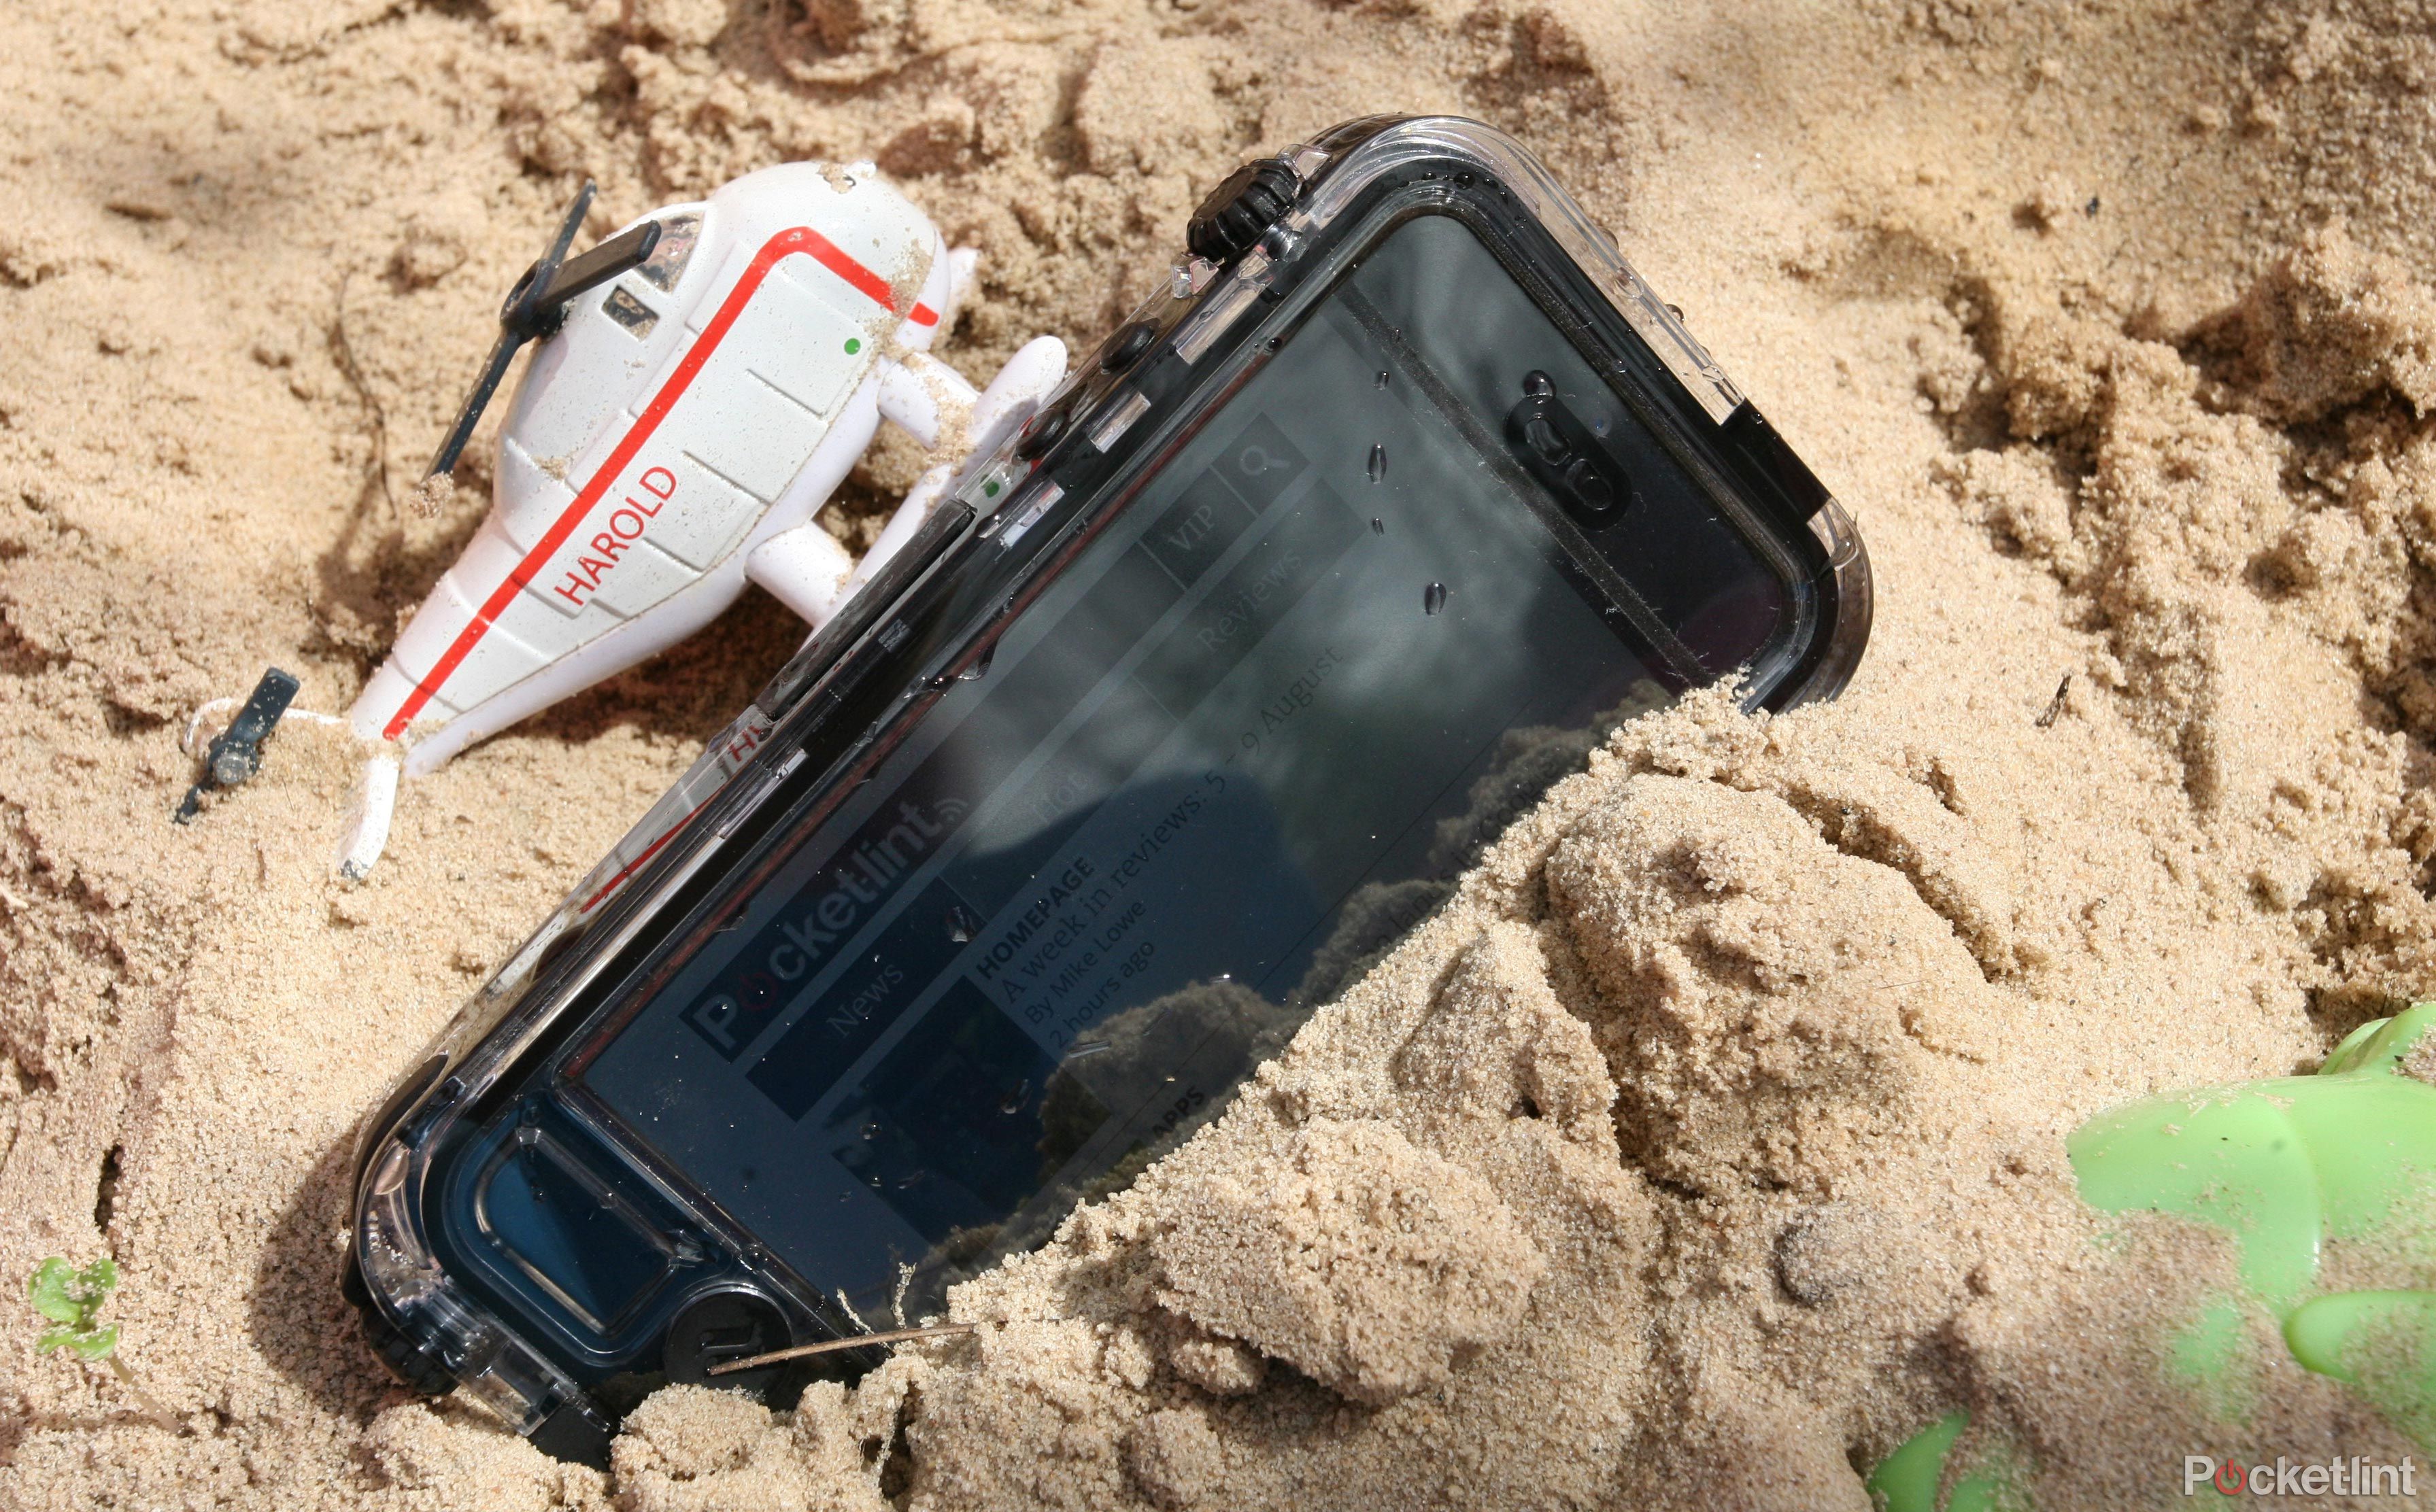 hands on griffin survivor catalyst waterproof iphone 5 case review image 7